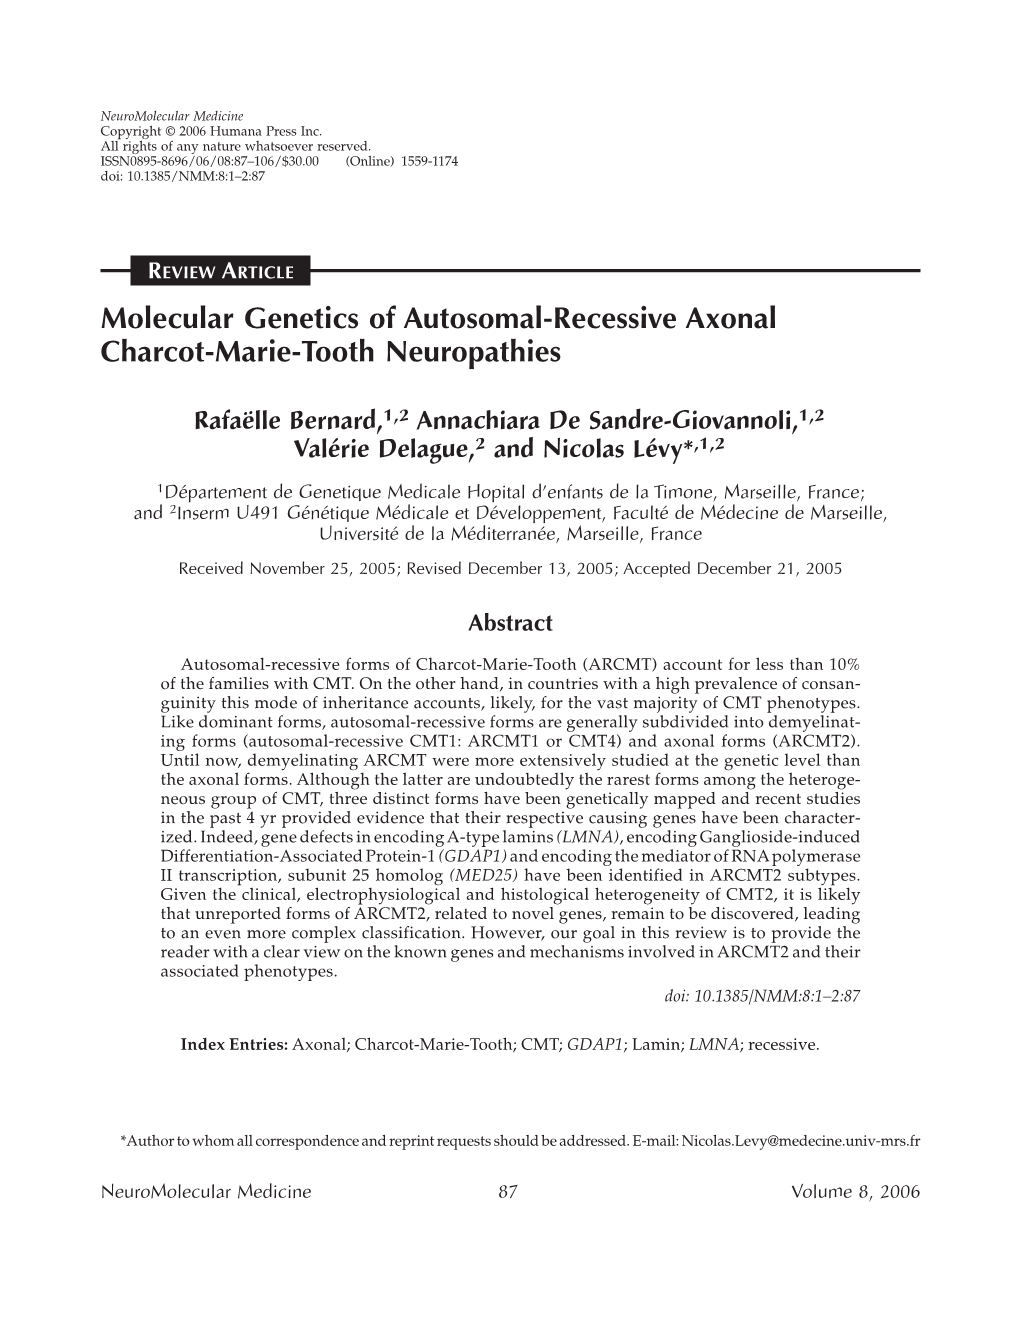 Molecular Genetics of Autosomal-Recessive Axonal Charcot-Marie-Tooth Neuropathies